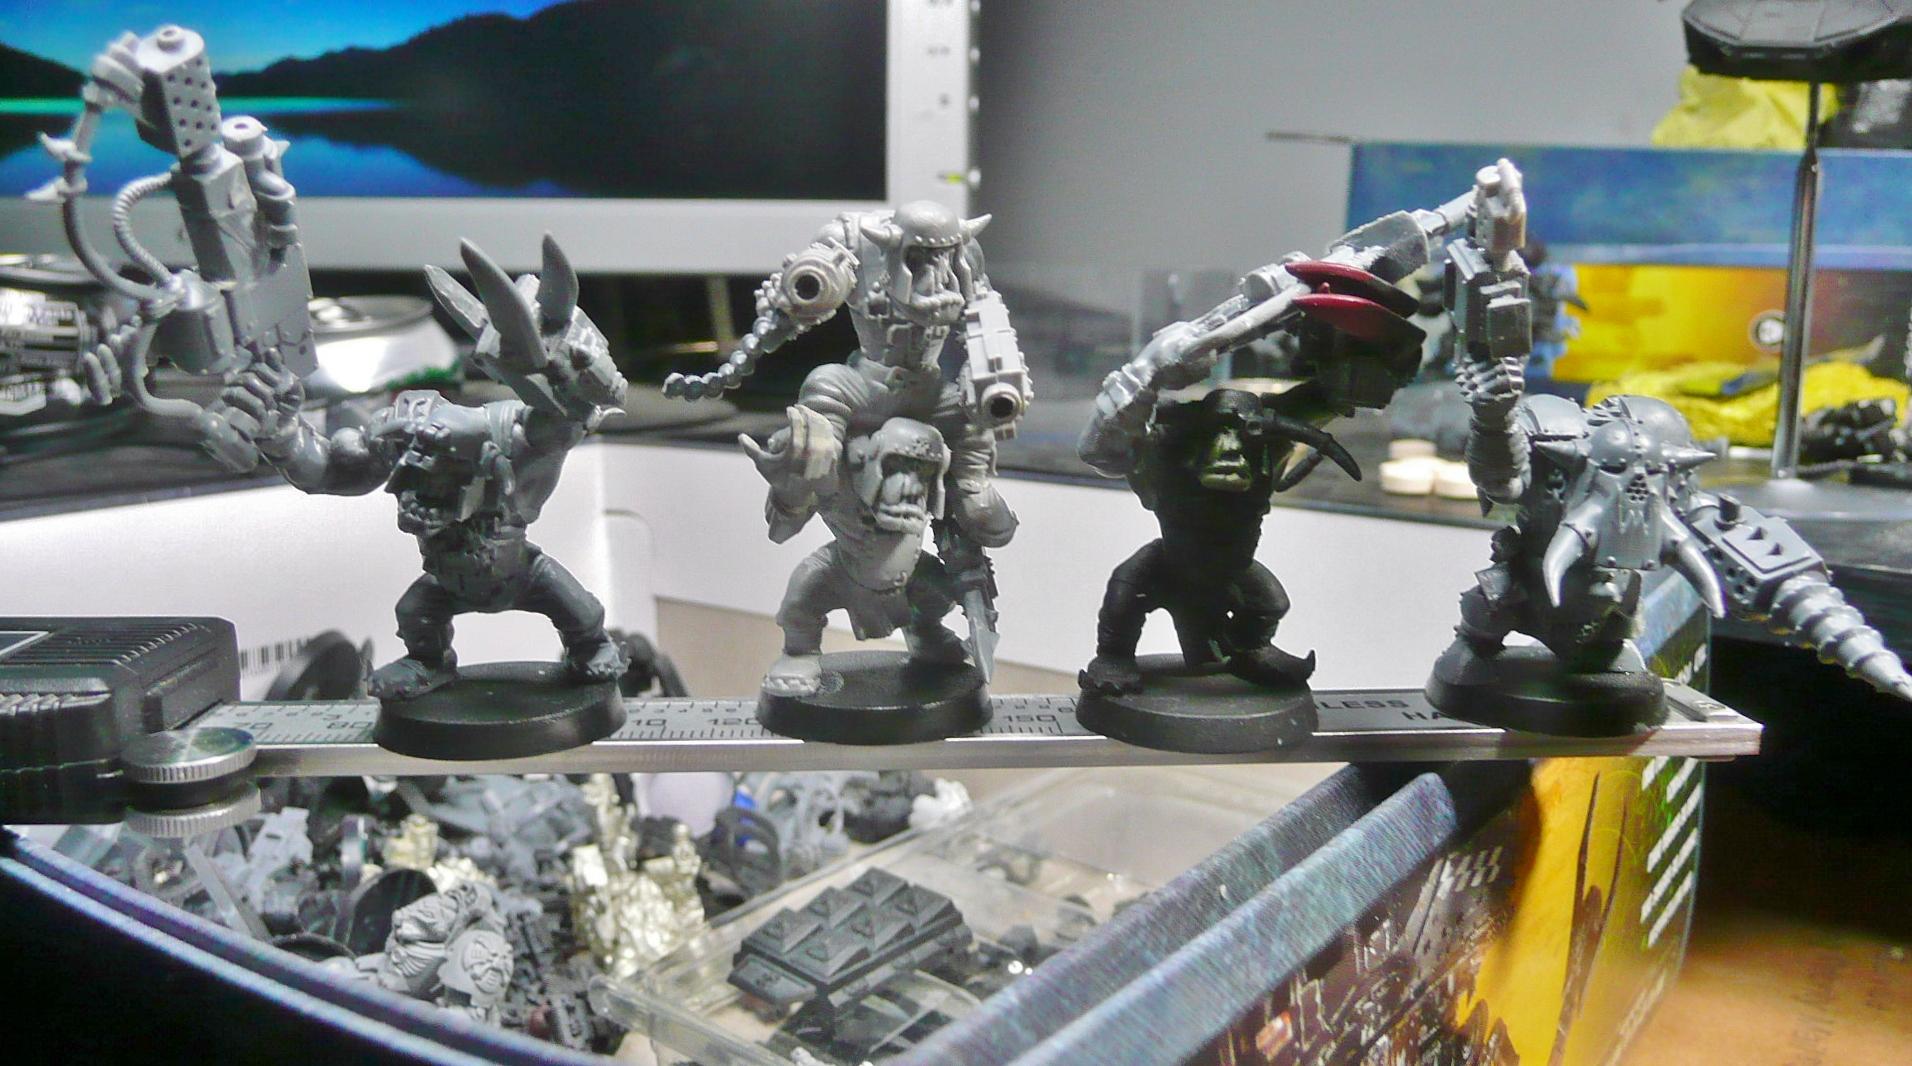 Conversion, Orks, Some of my nobs: 4 PKs, 1 Skorcha, 1 Twin Shoota, 1 Rokkit, 1 Skorcha + Armor